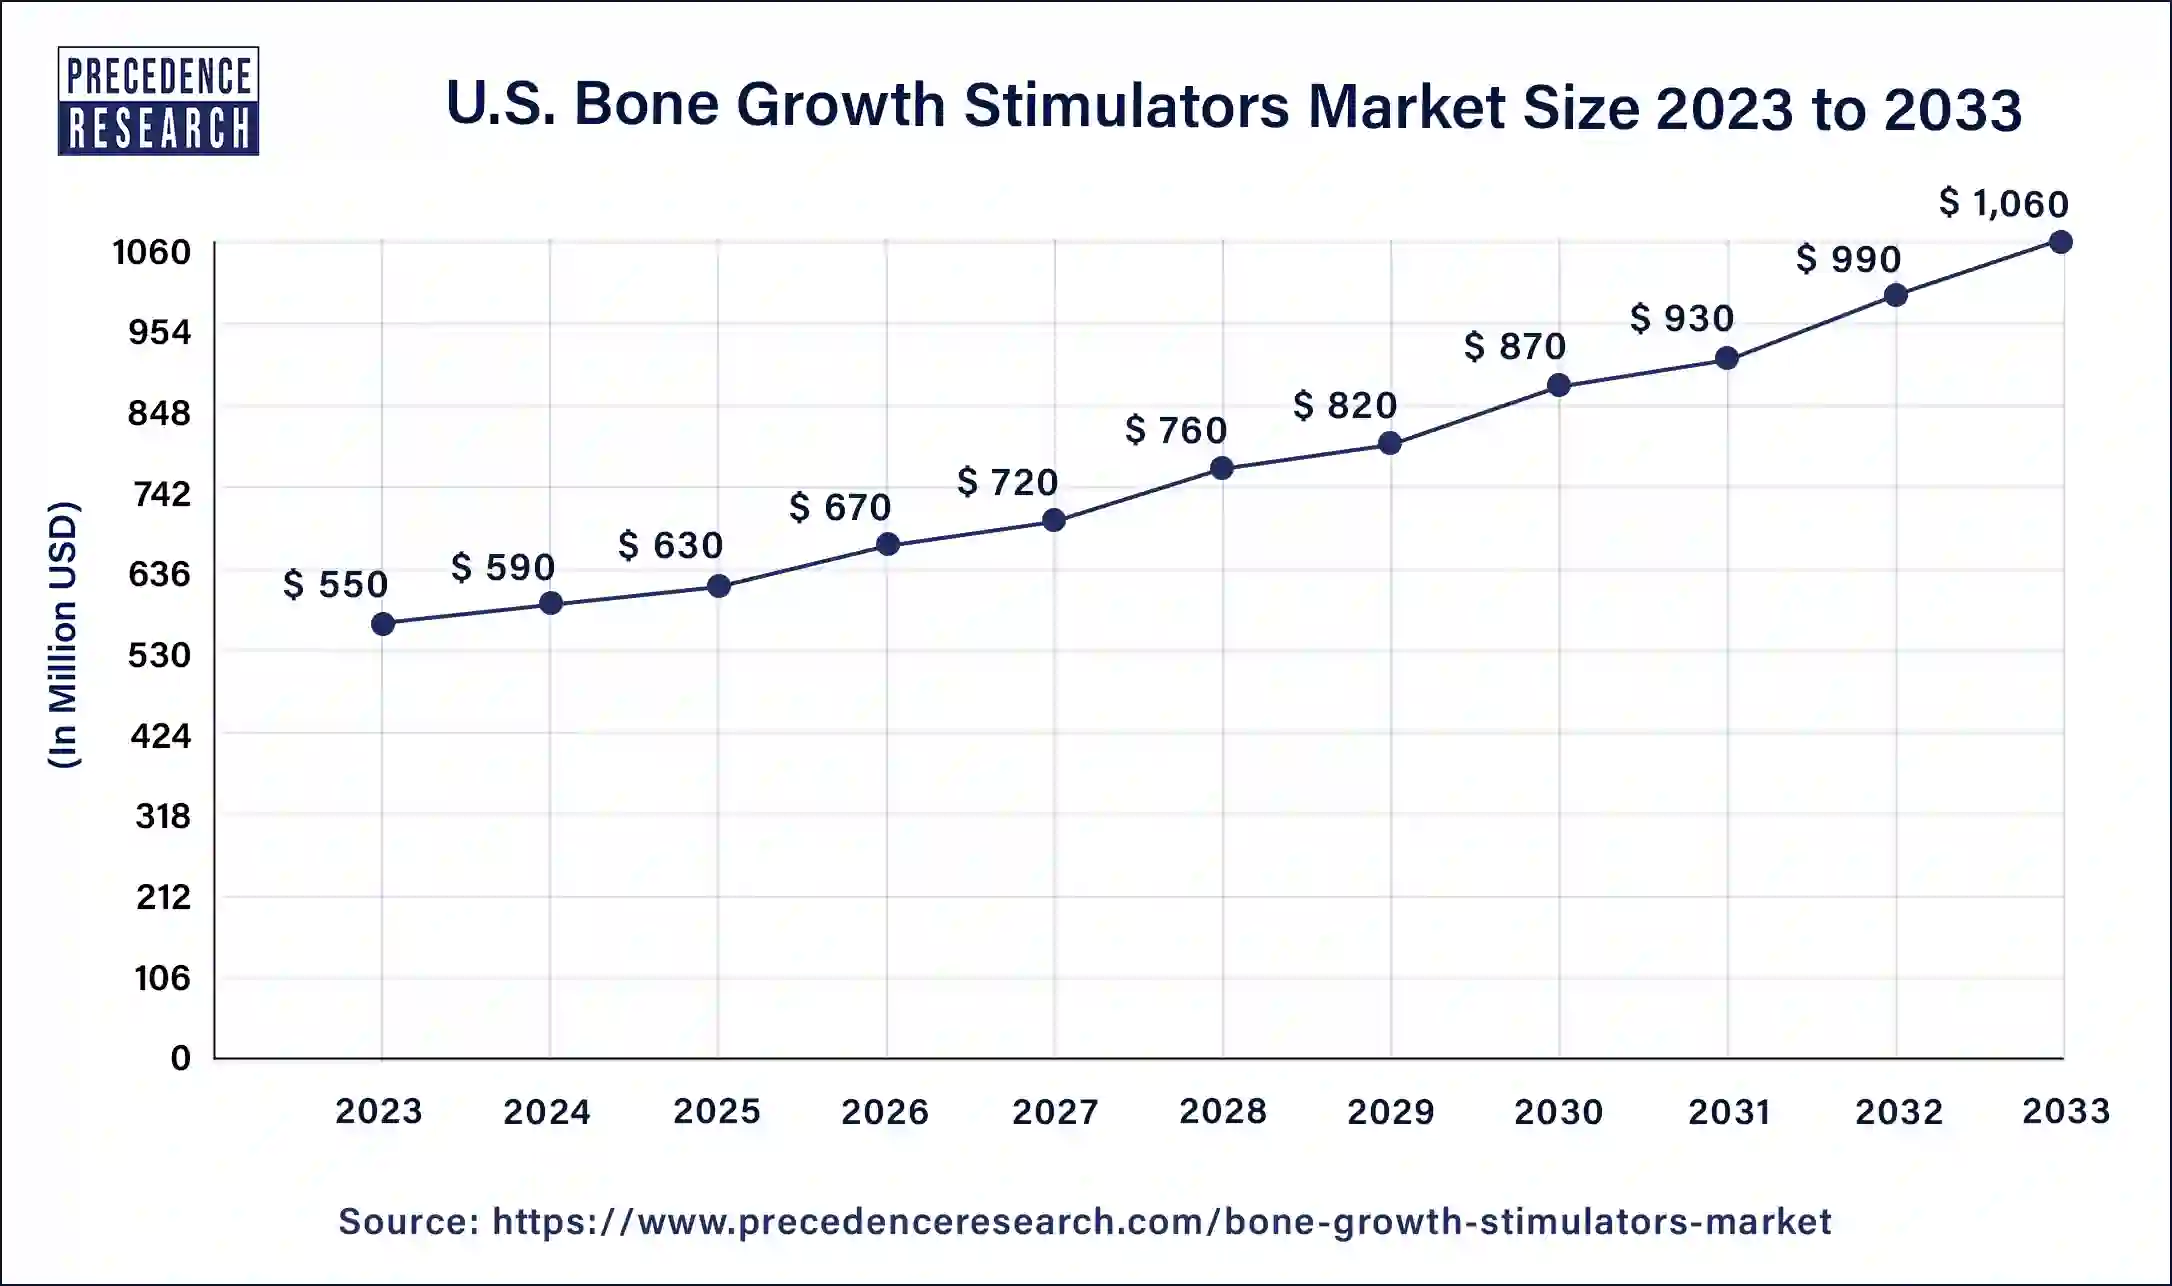 U.S. Bone Growth Stimulators Market Size 2024 to 2033